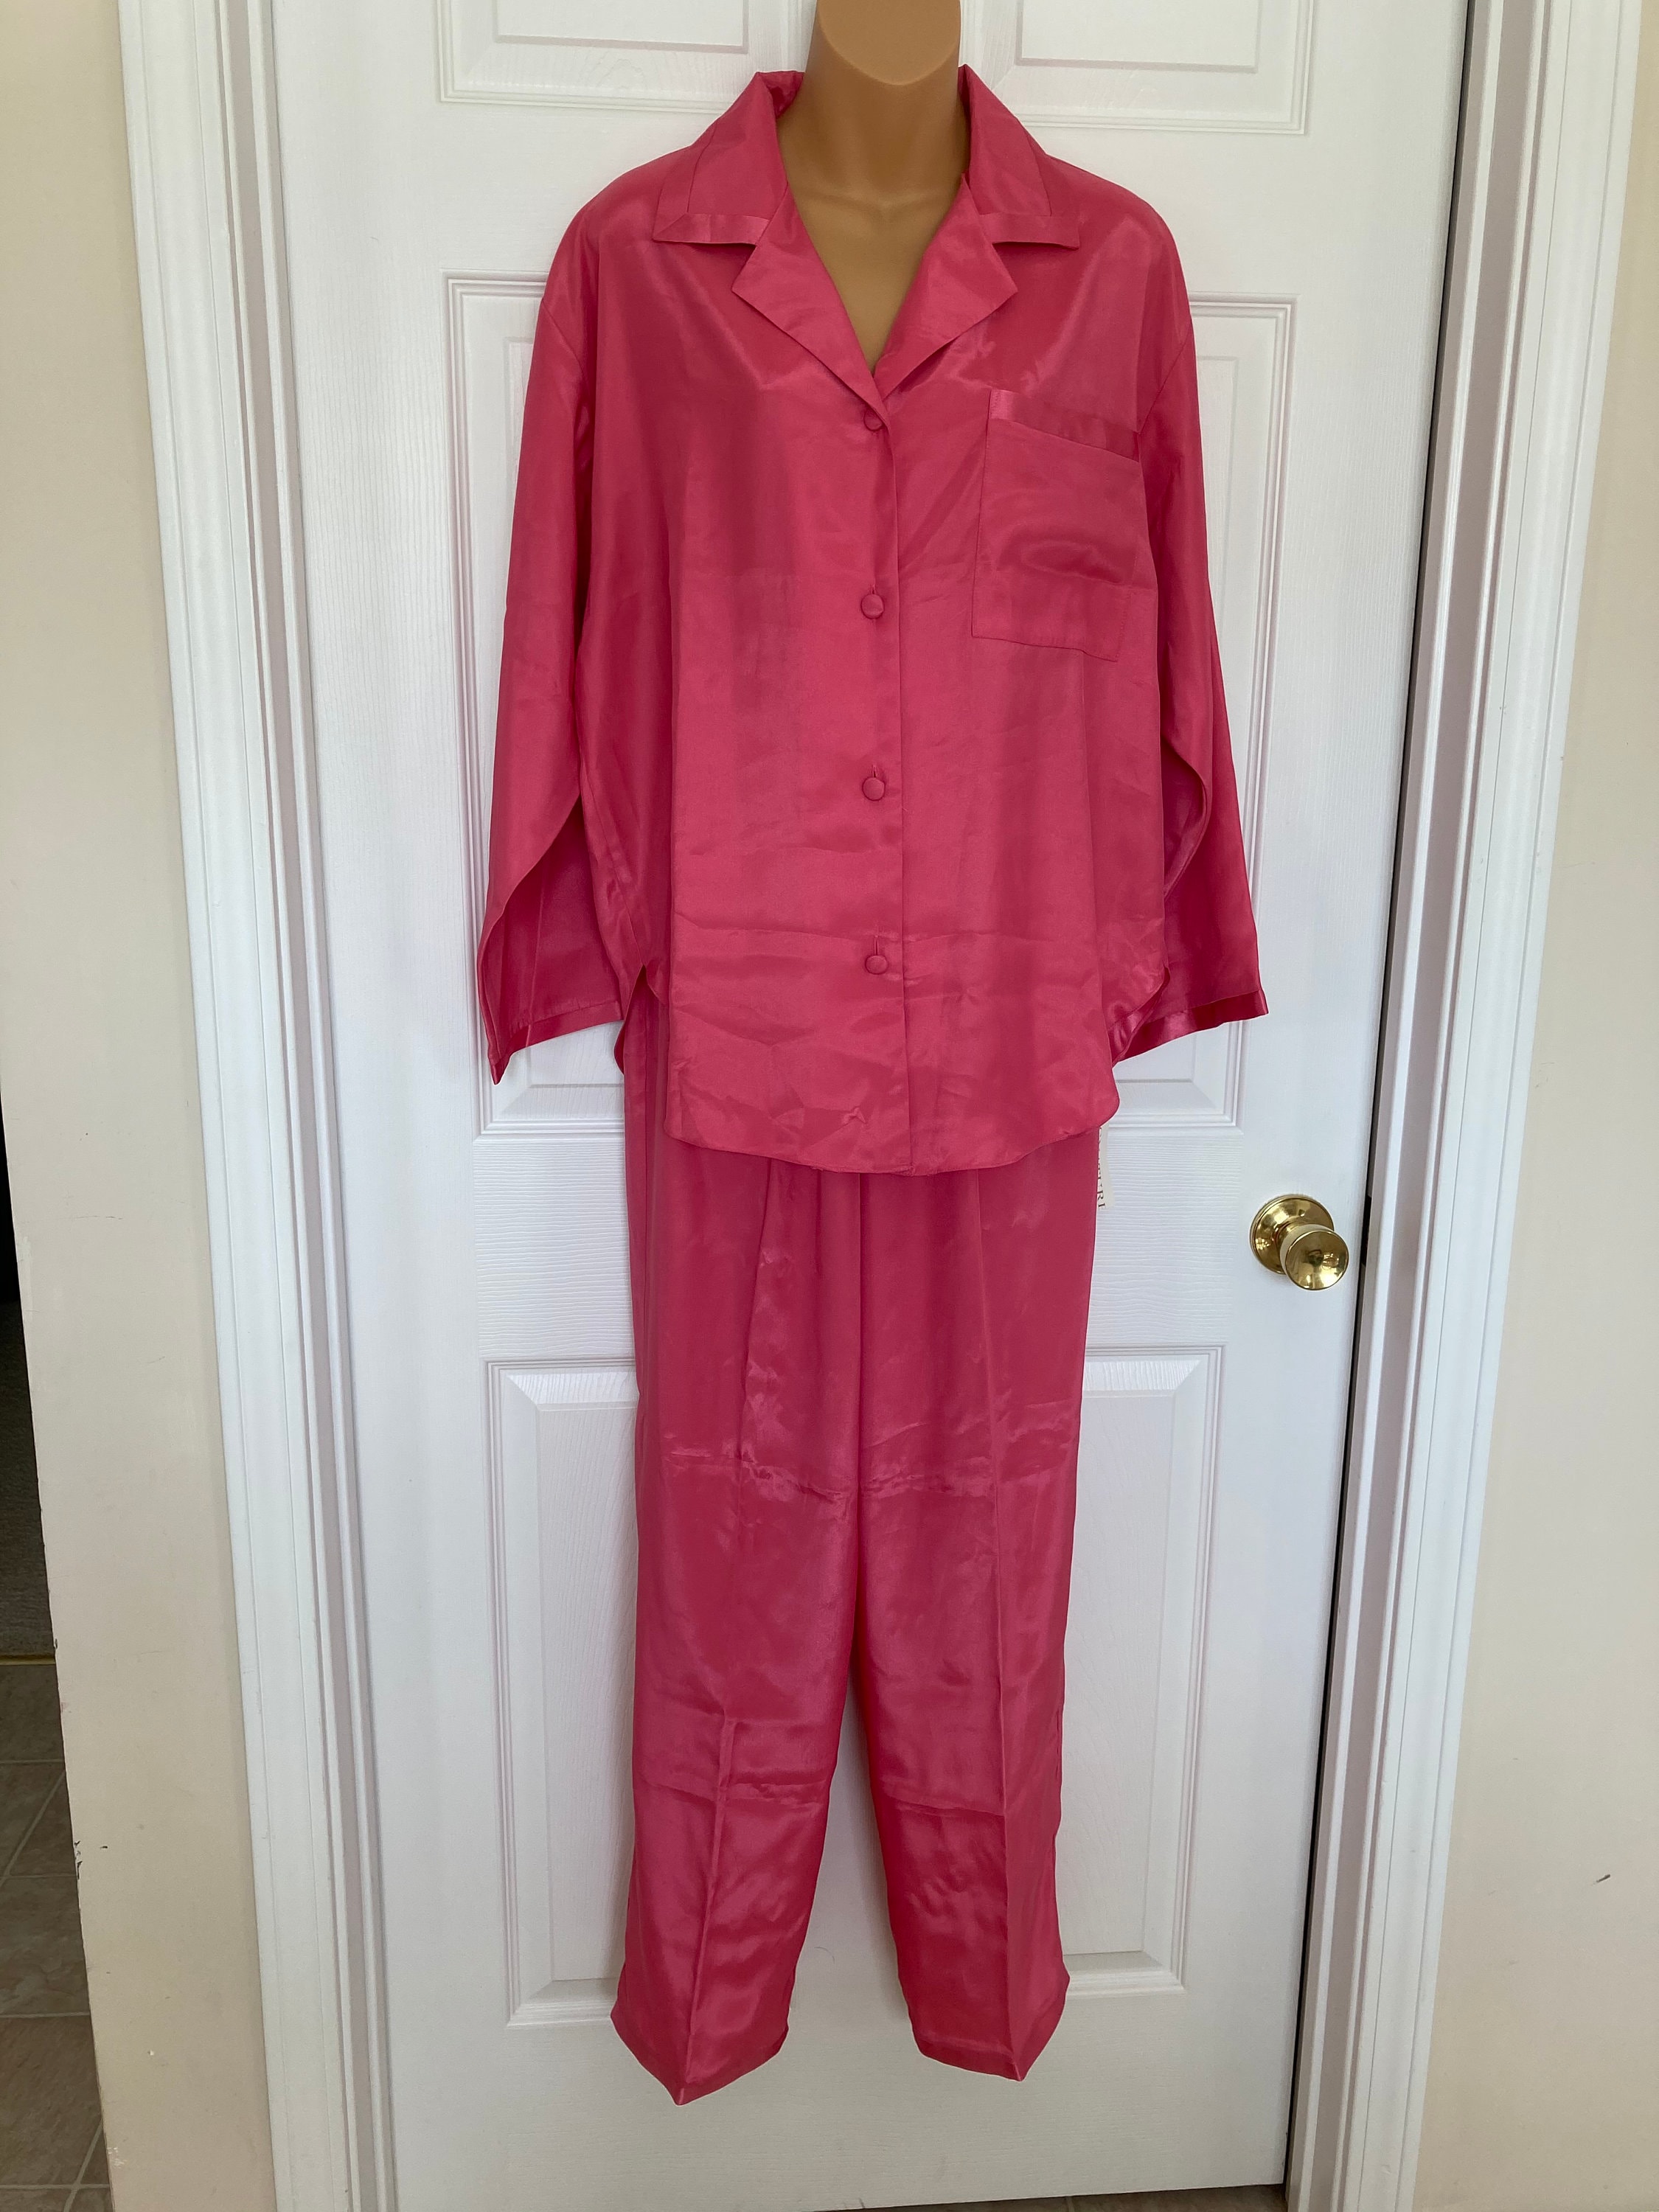 Kleding Unisex kinderkleding Pyjamas & Badjassen Pyjama Slaap romper roze-beige satijn met zwart chantilly kant 